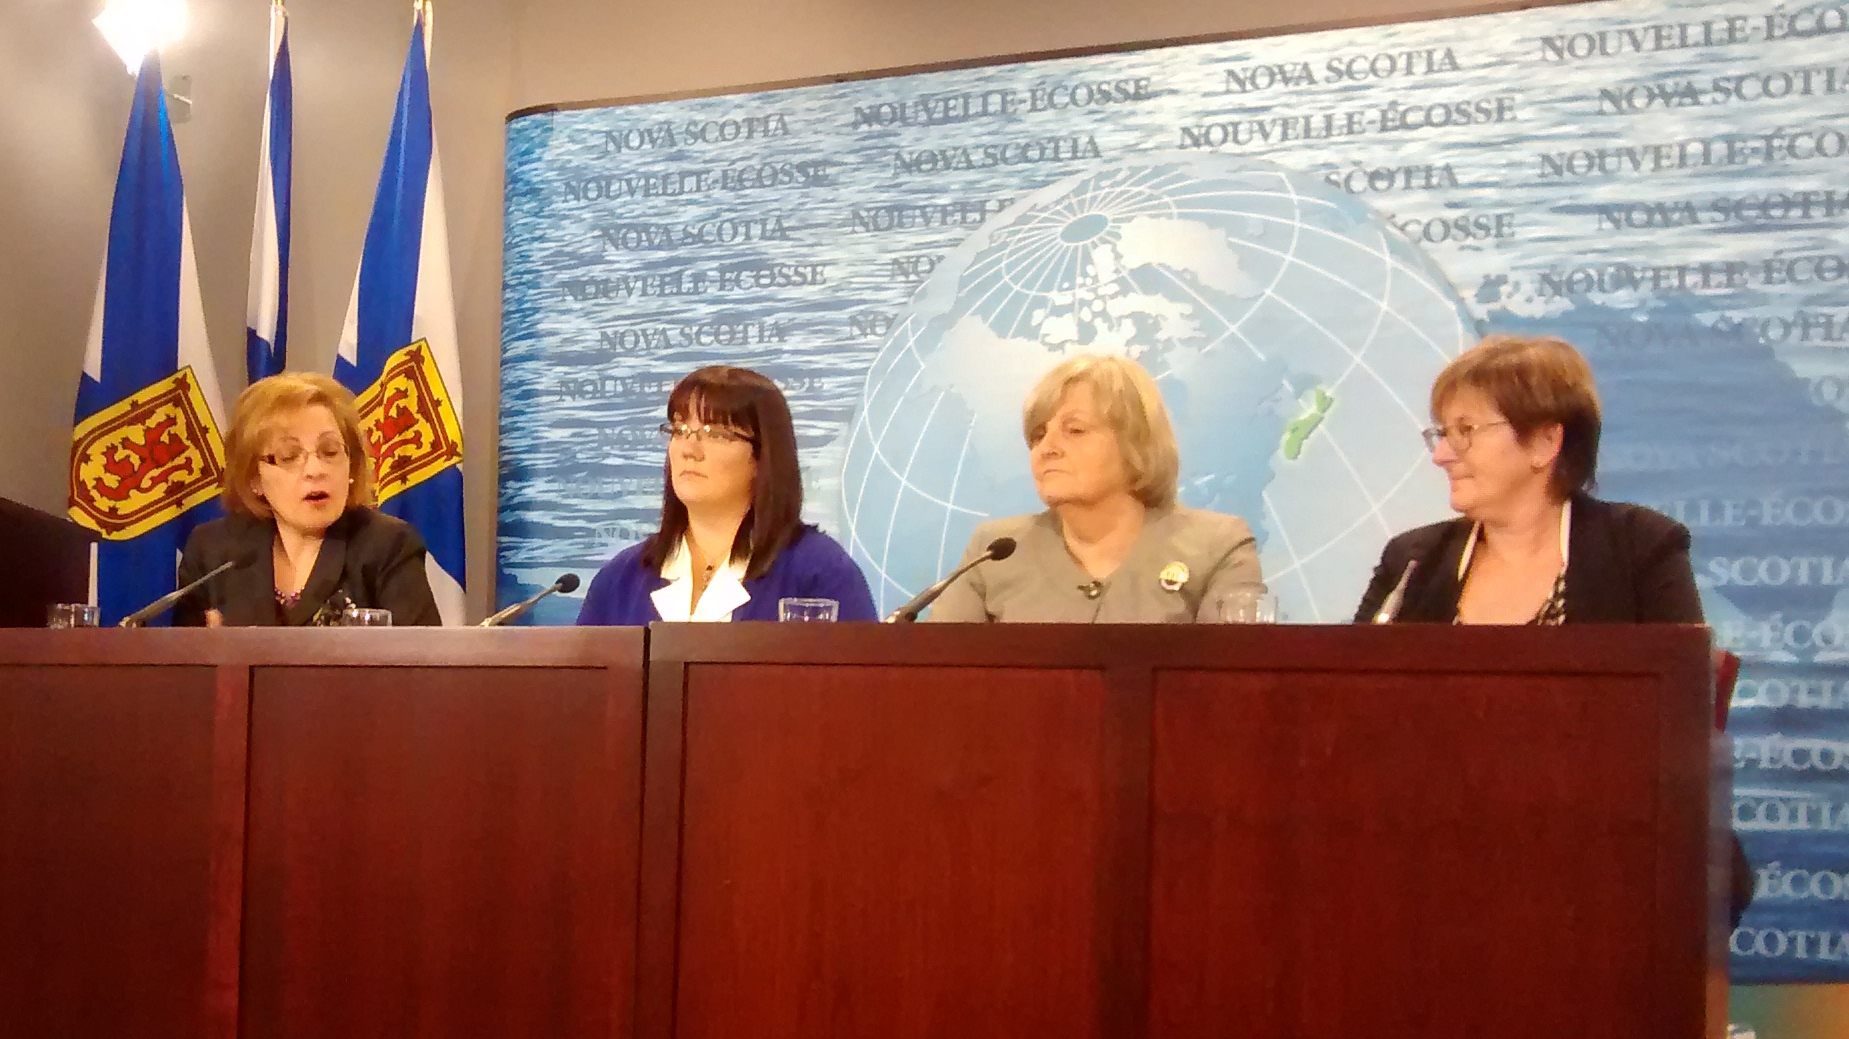 Lena Metlege Diab, Suzanne Ley, Gerry Mills and Barbara Miller Nix speak at a news conference.